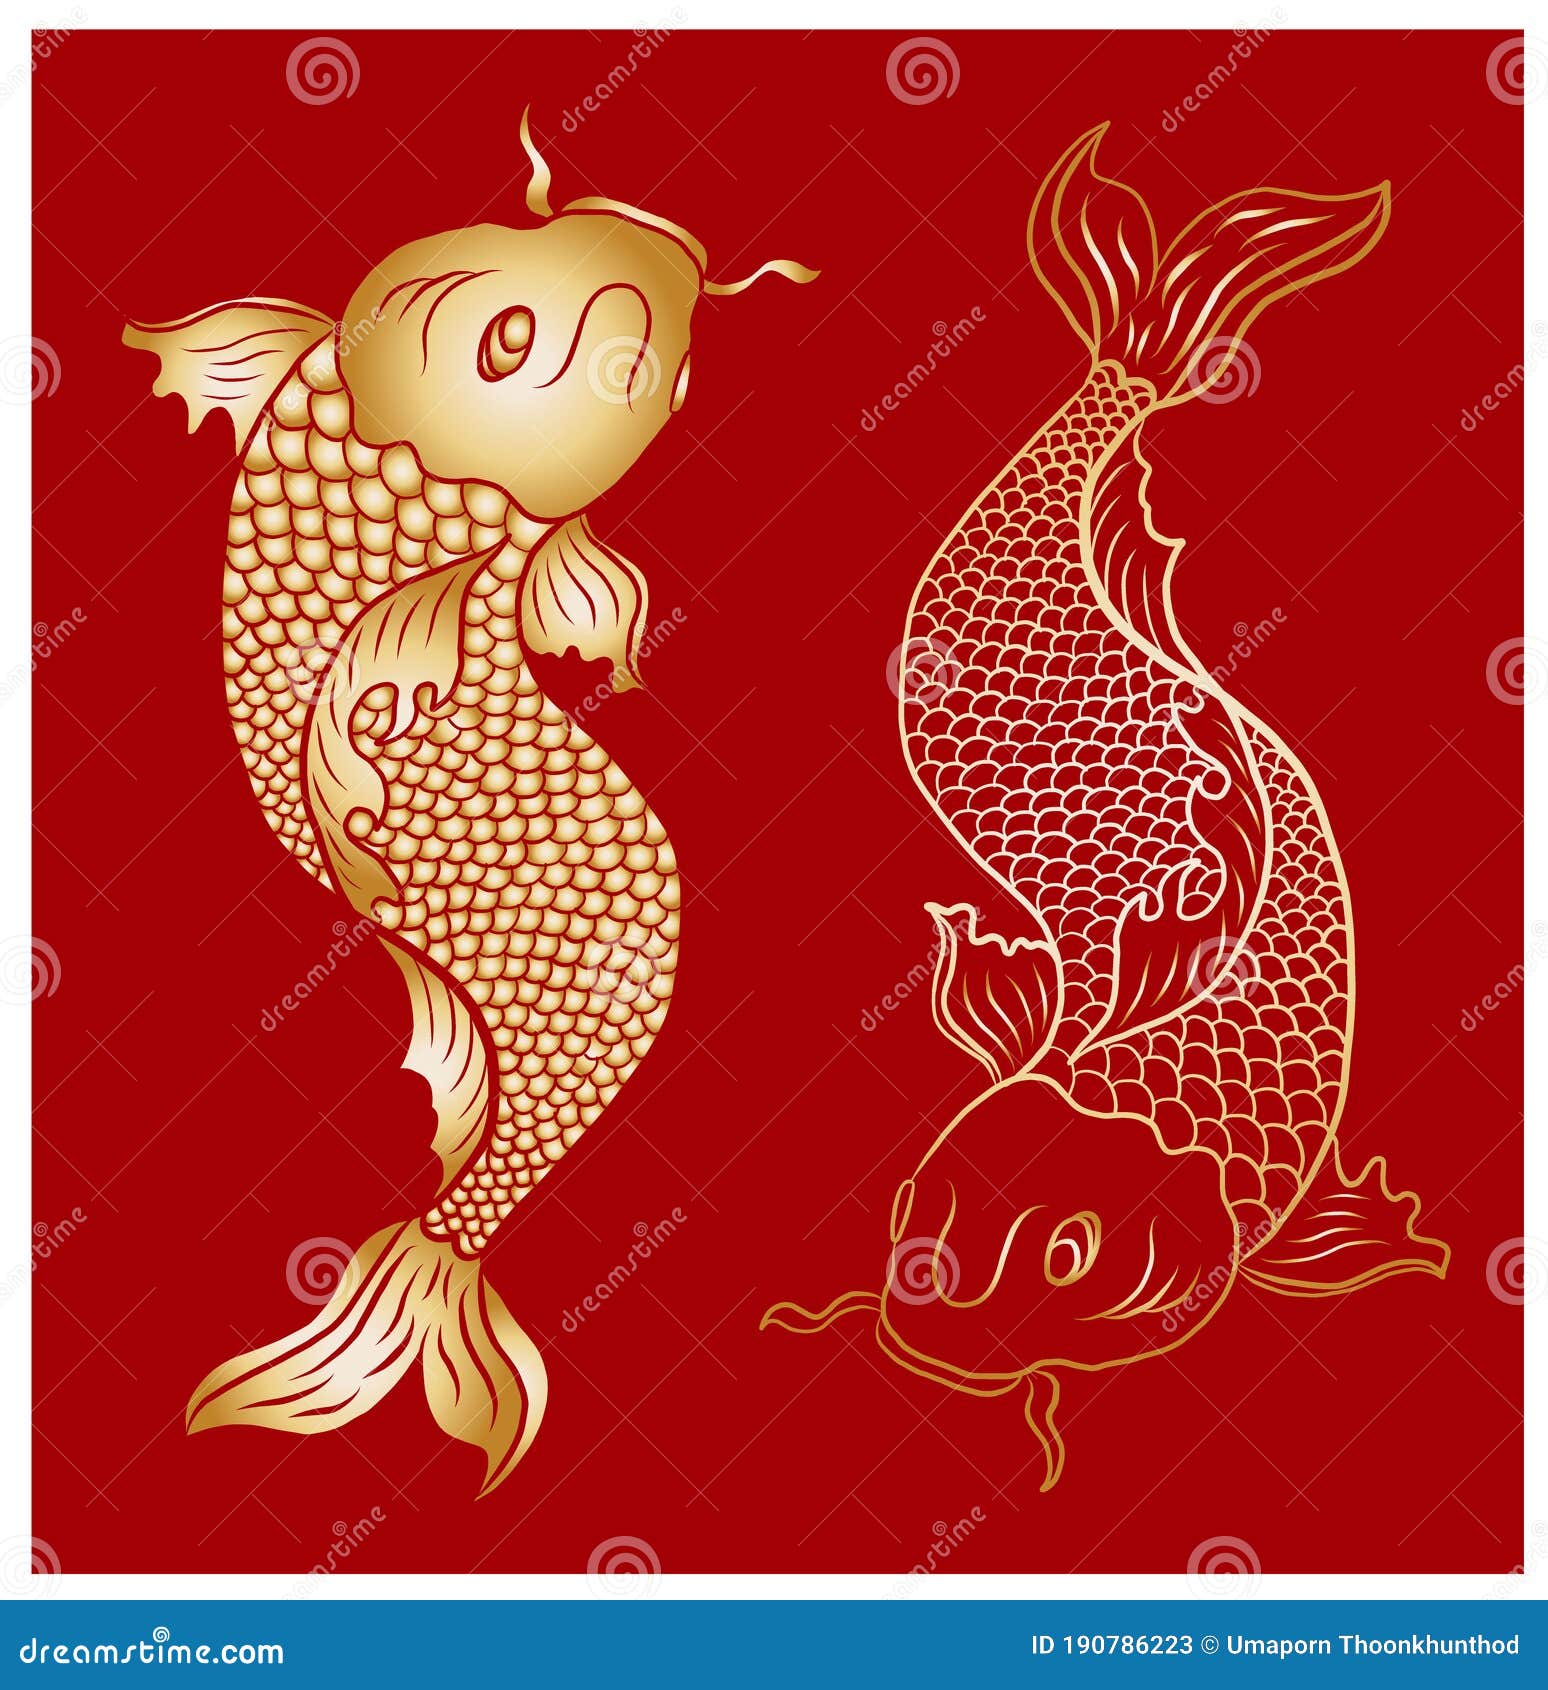 Japanese Koi Fish Vector for Tattoo Design on Background. Stock Vector ...